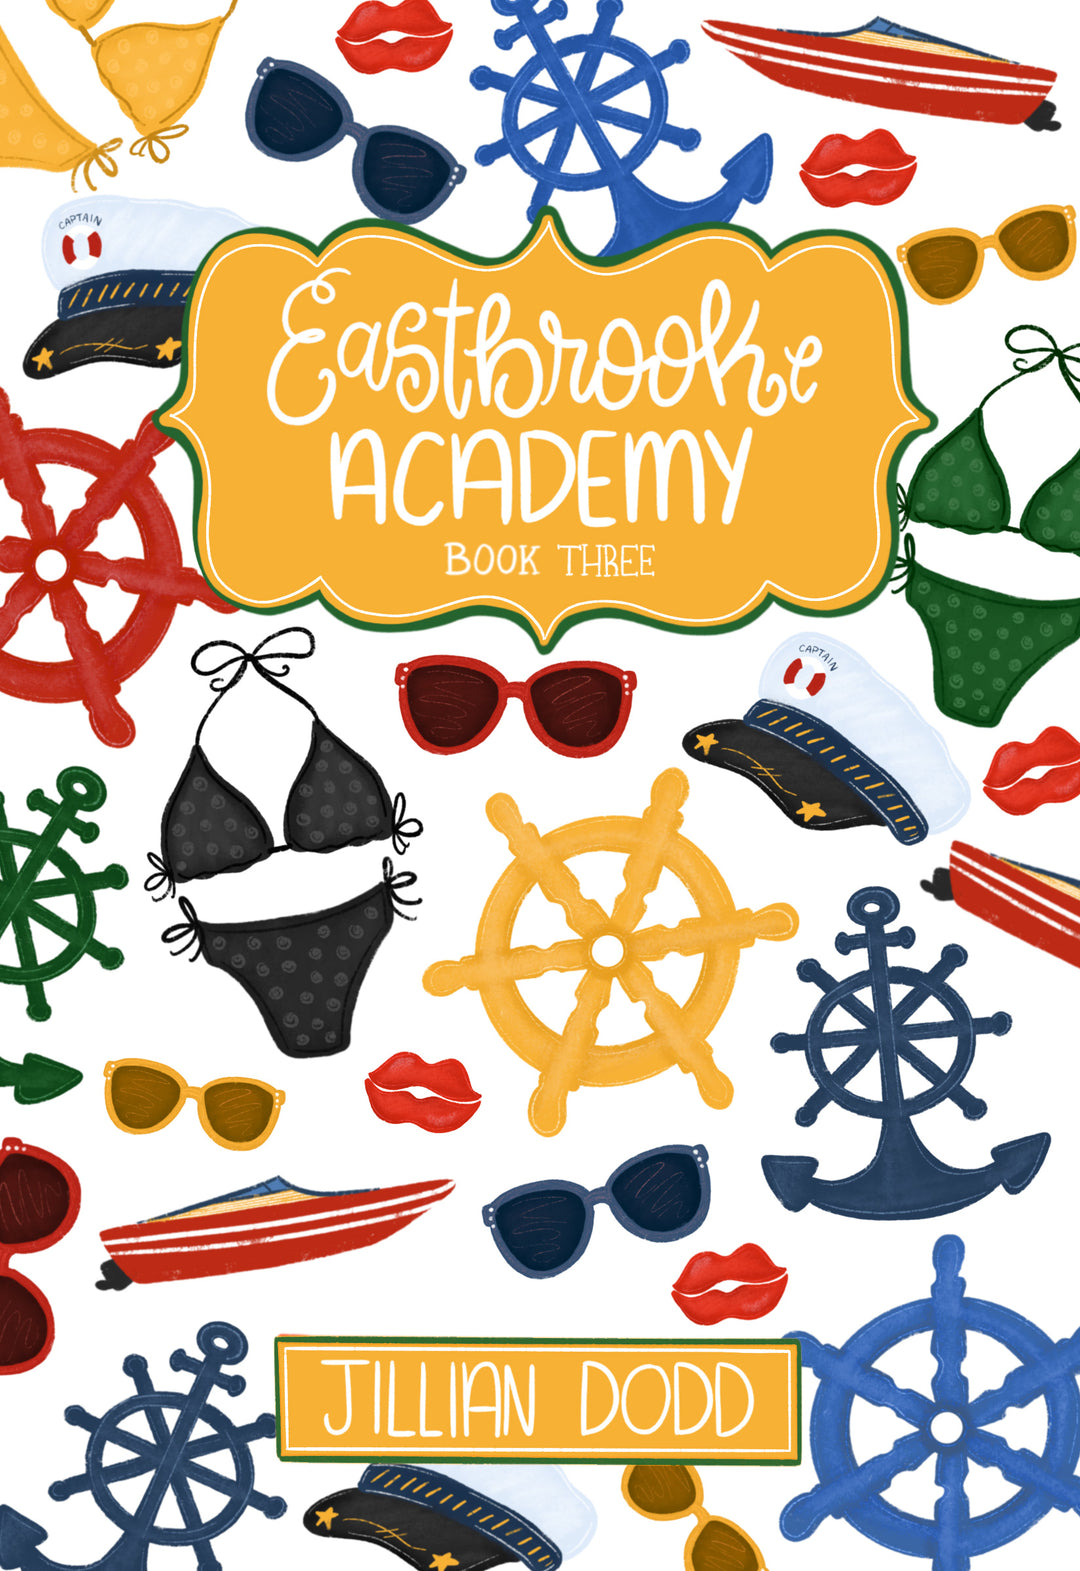 Eastbrooke Academy - Kickstarter versions